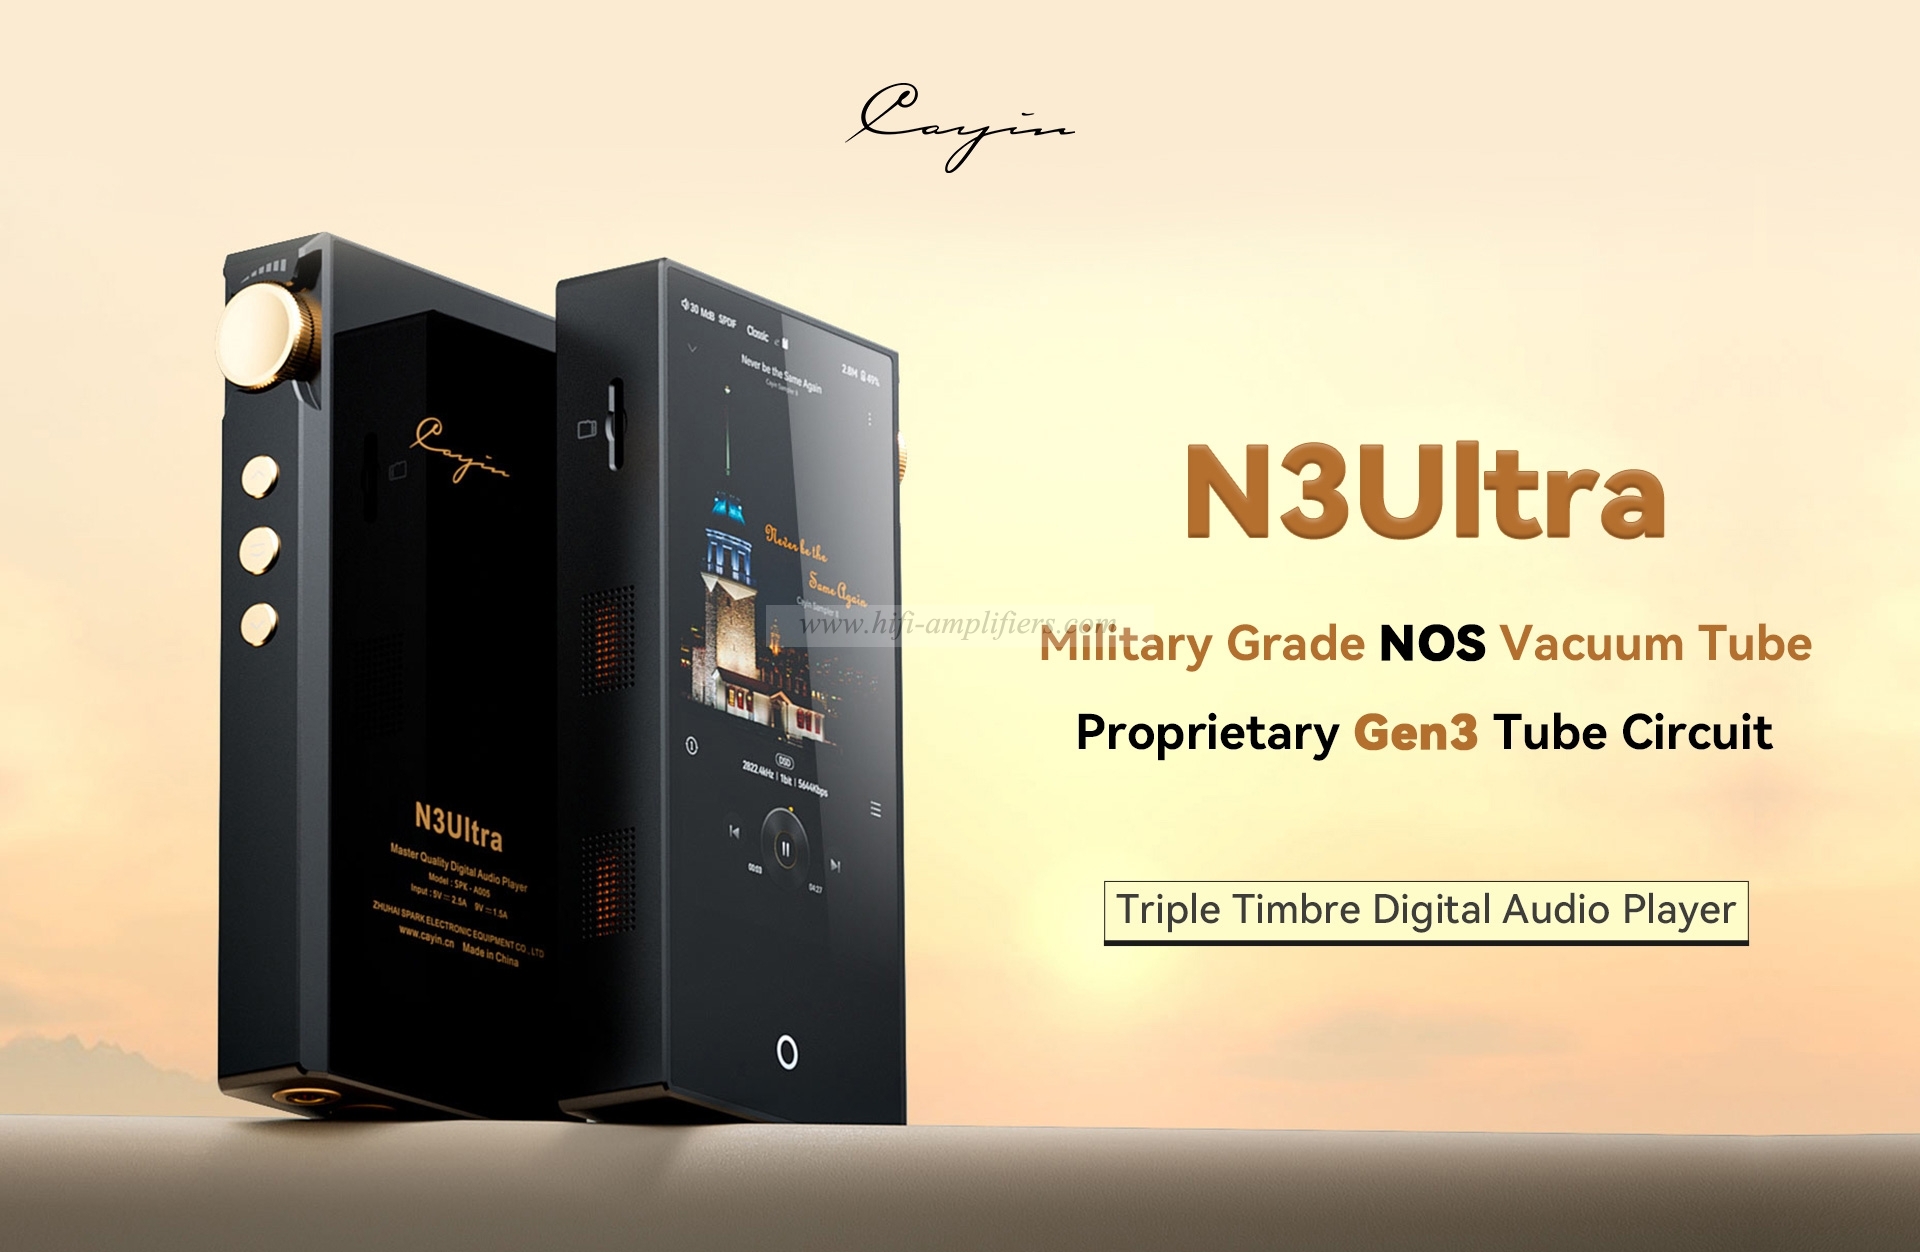 Cayin N3Ultra Military Grade NOS Vacuum TubeProprietary Gen3 Tube Circuit Triple Timbre Digital Audio Player